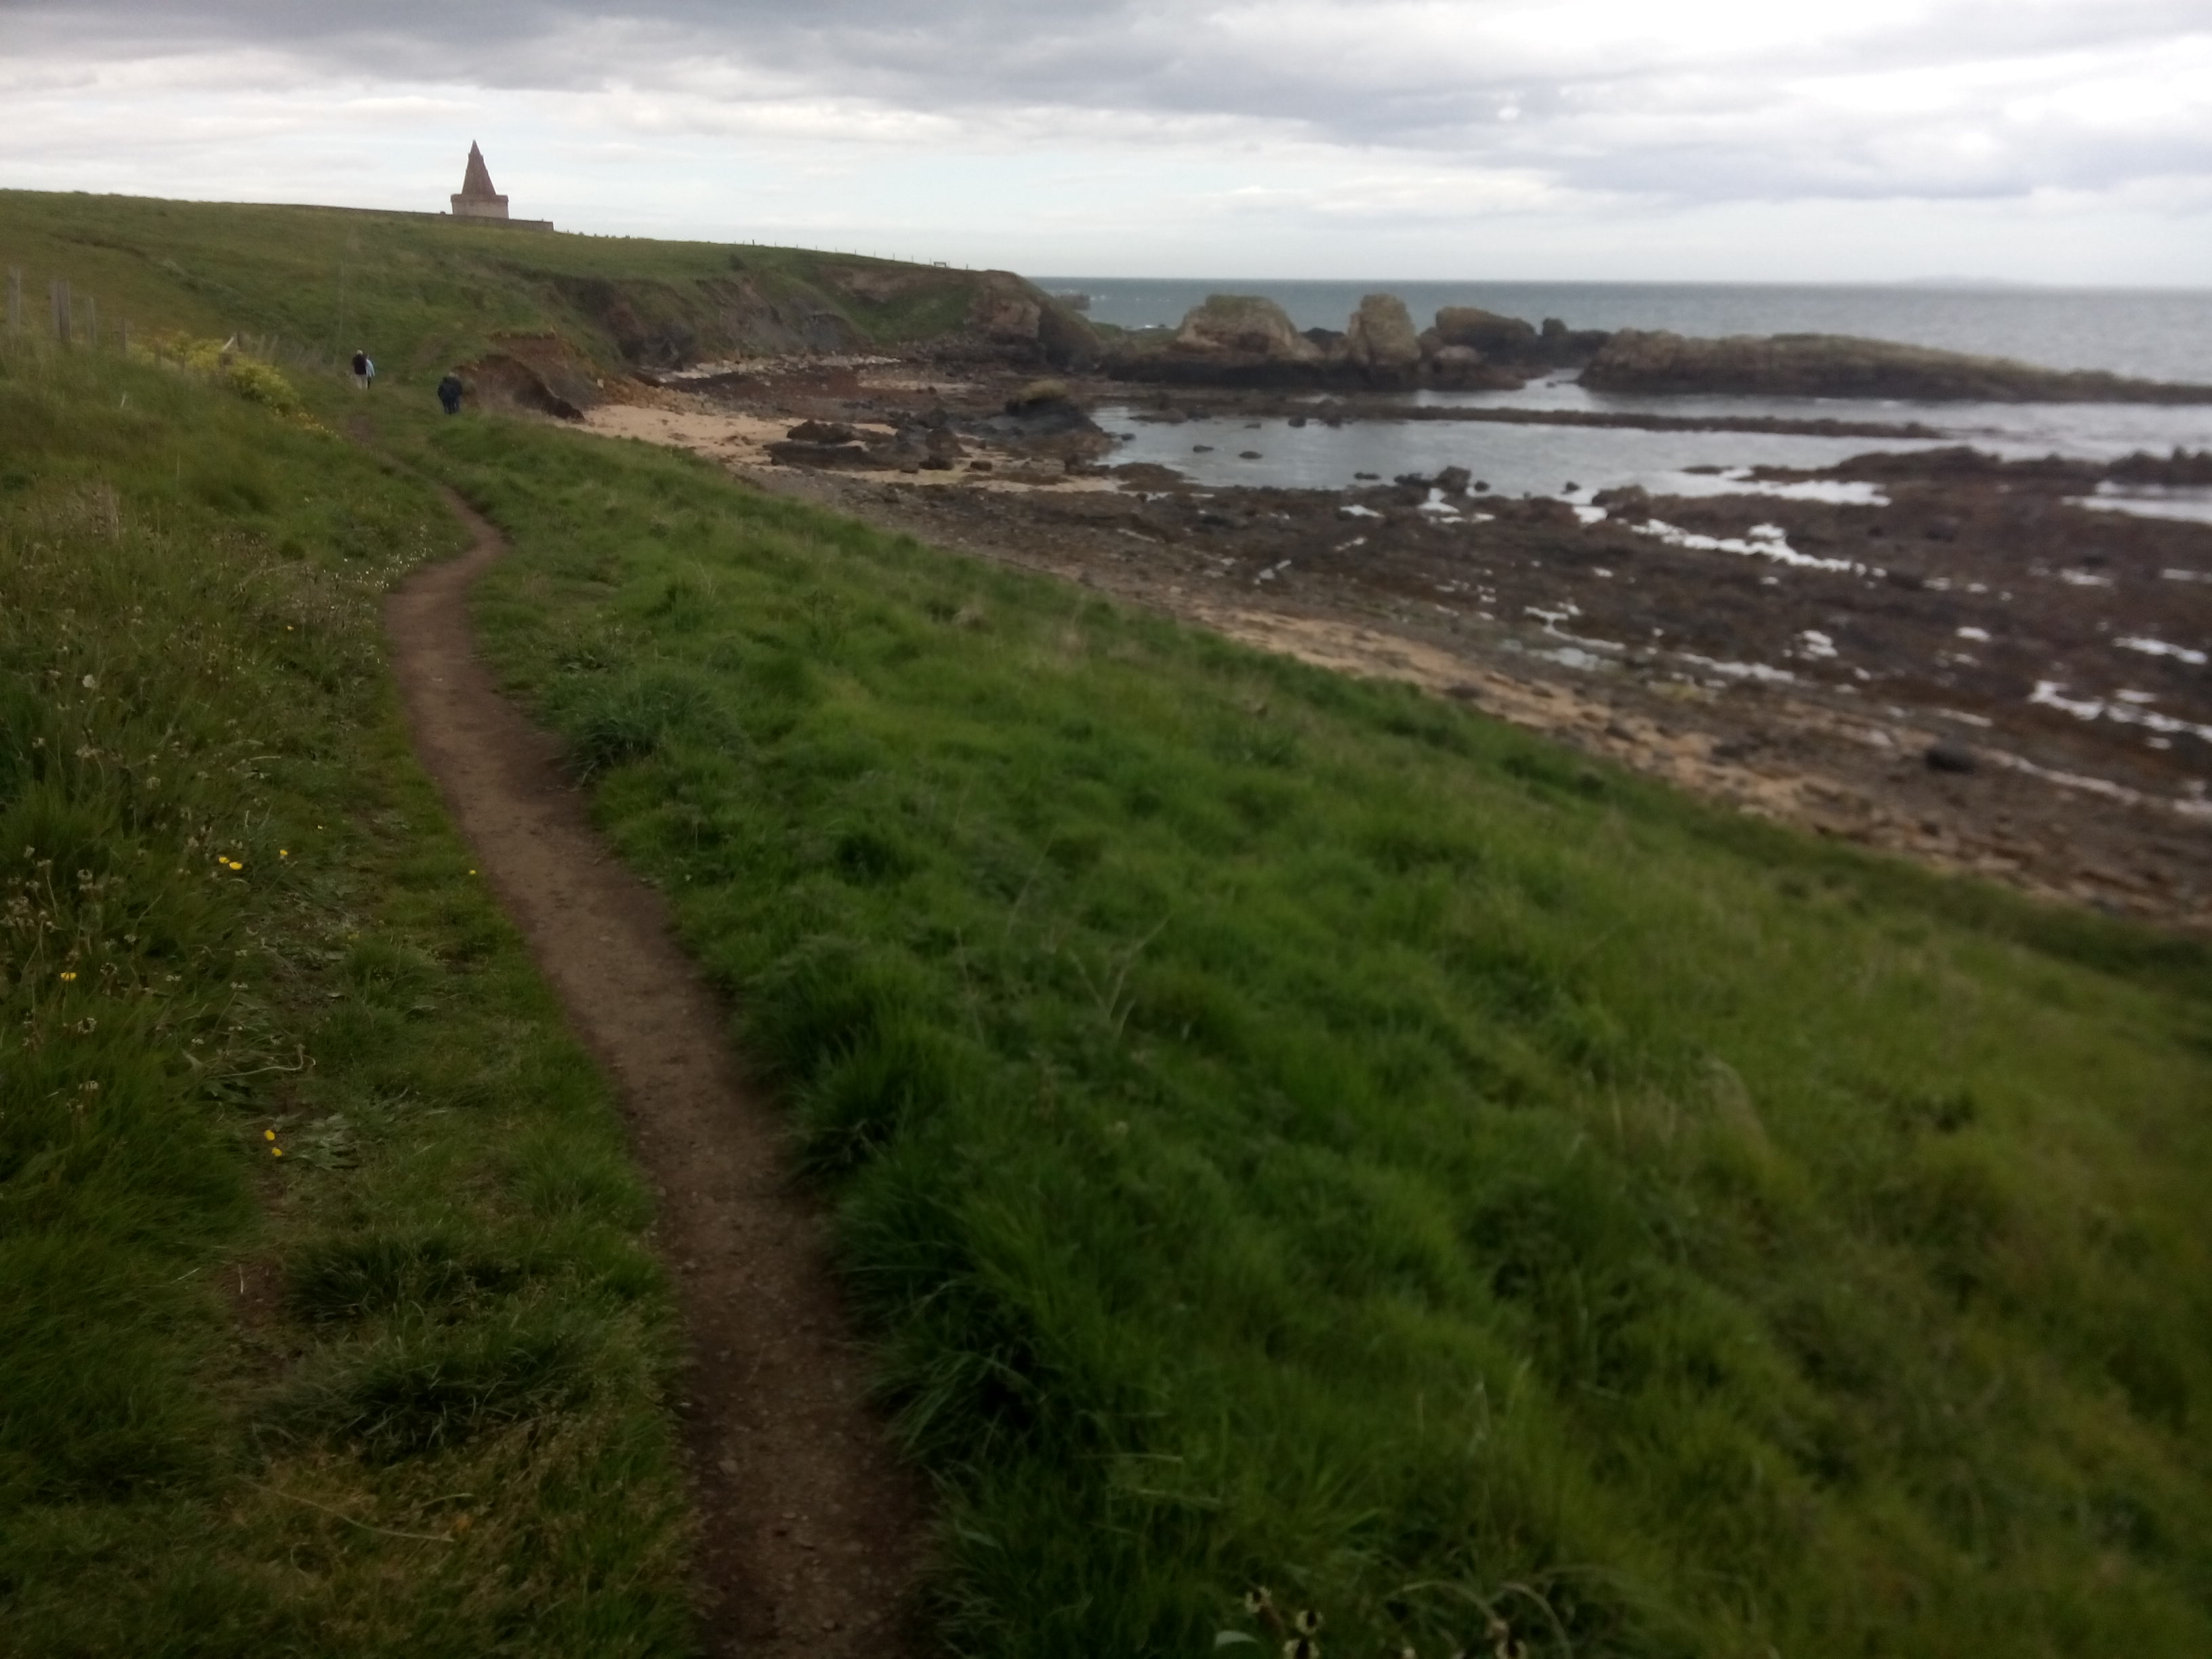 A narrow mud track runs along a grassy verge above a rocky shore